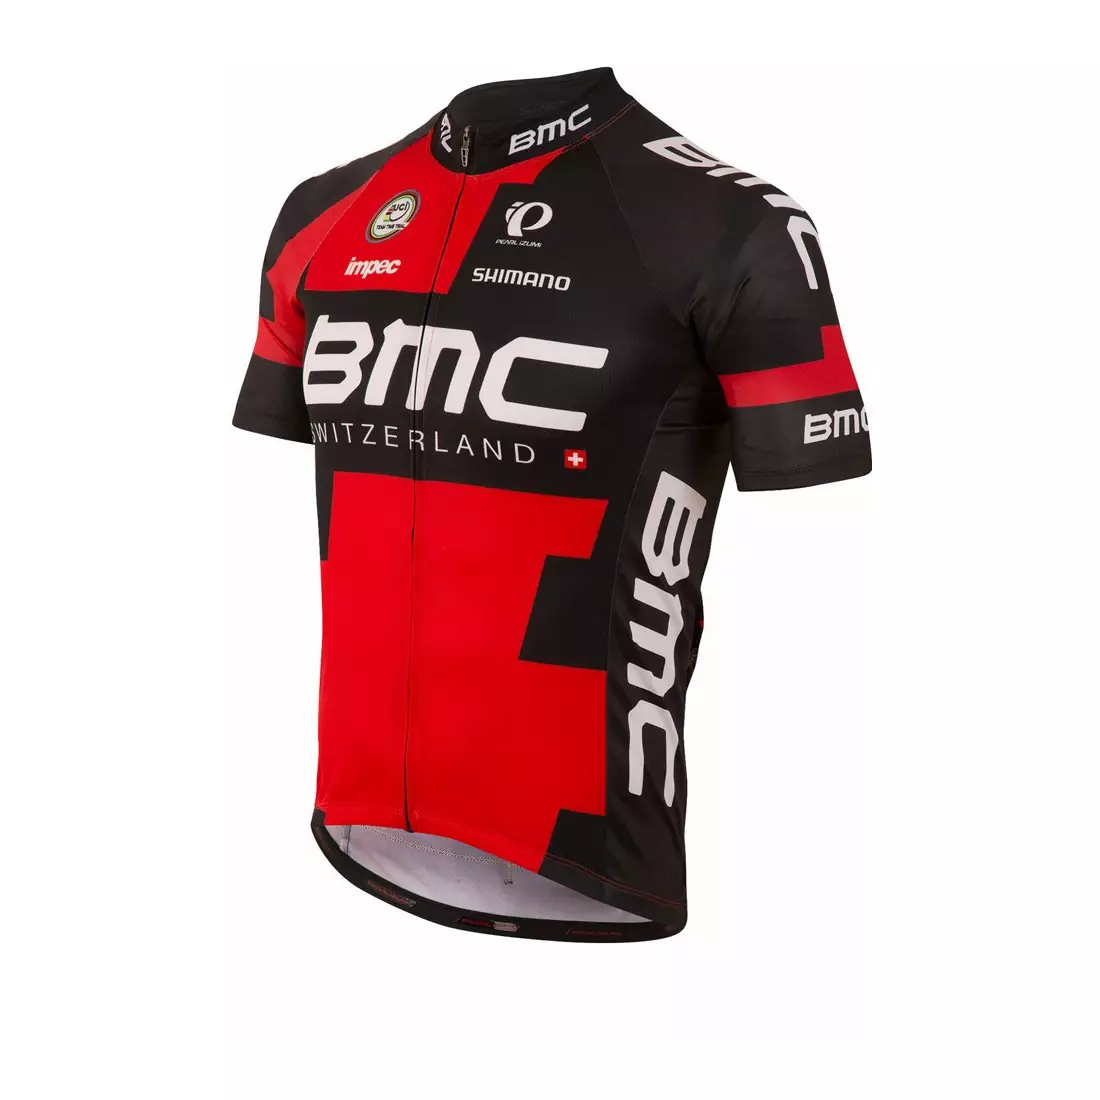 PEARL IZUMI ELITE BMC cycling team jersey 11121604